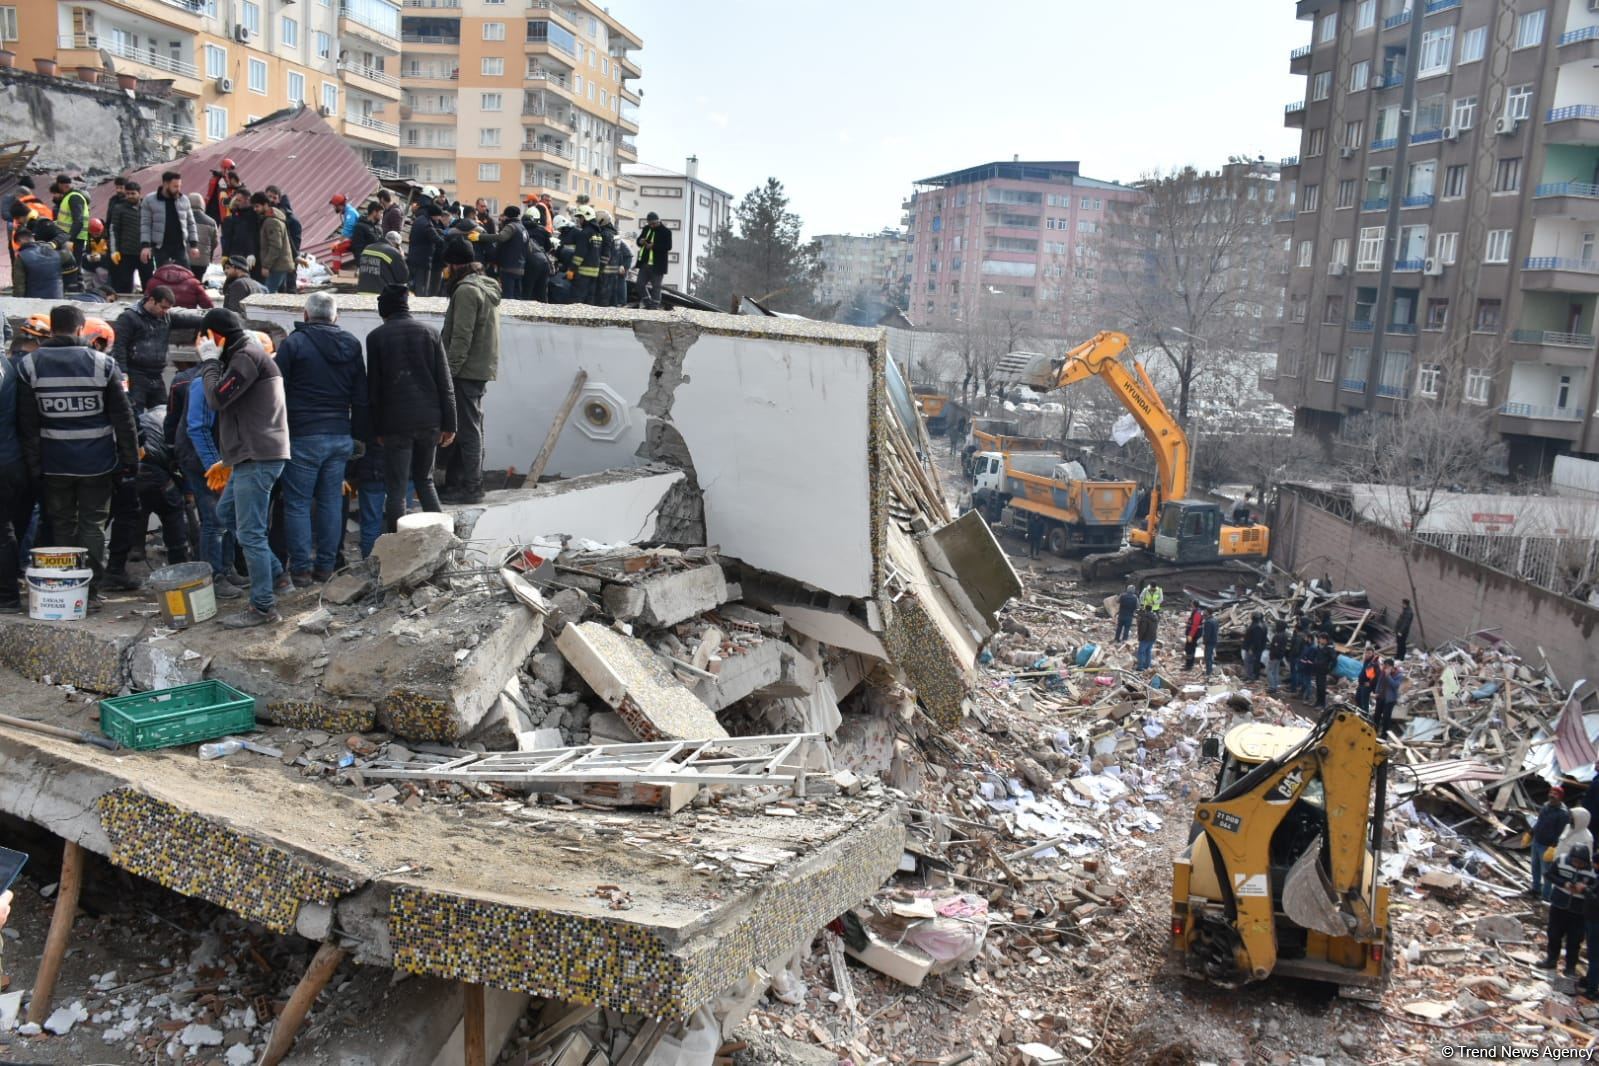 Türkiye publishes Erdogan’s order on declaring state of emergency in 10 quake-hit provinces